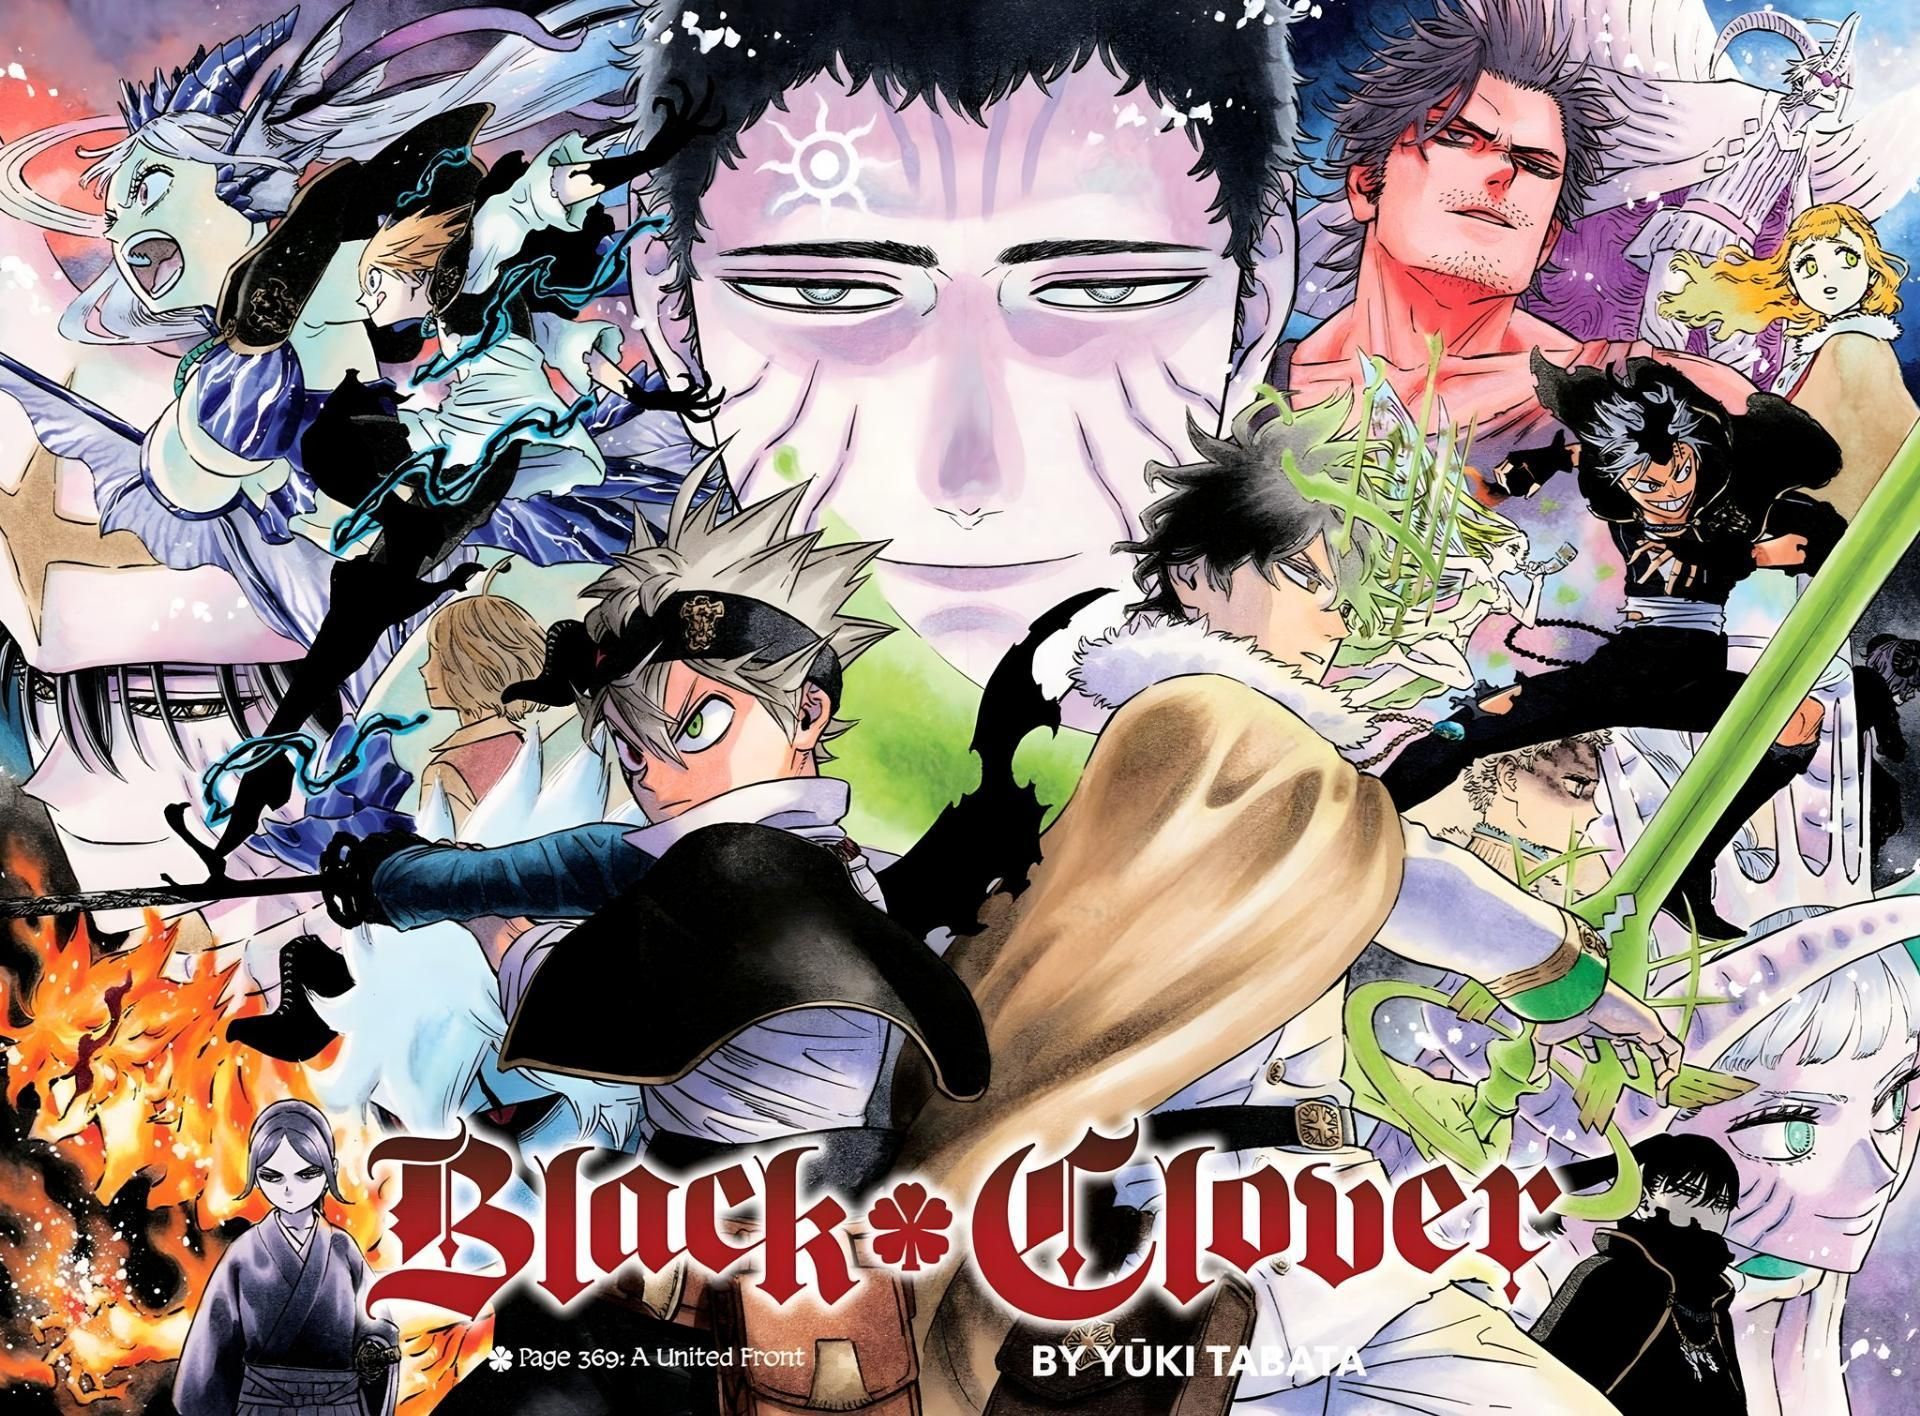 Black Clover manga